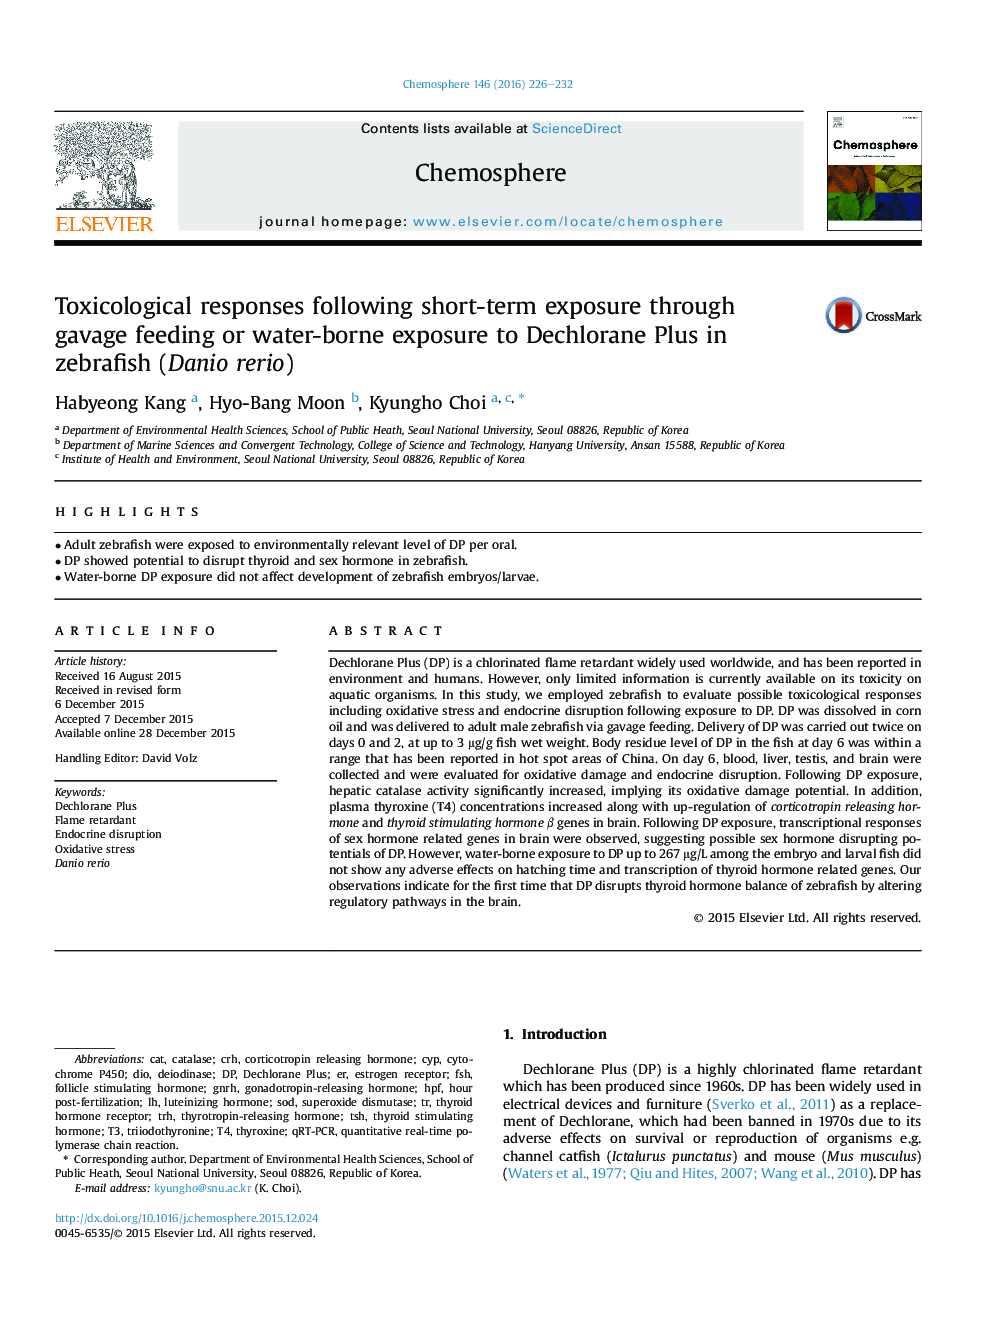 Toxicological responses following short-term exposure through gavage feeding or water-borne exposure to Dechlorane Plus in zebrafish (Danio rerio)